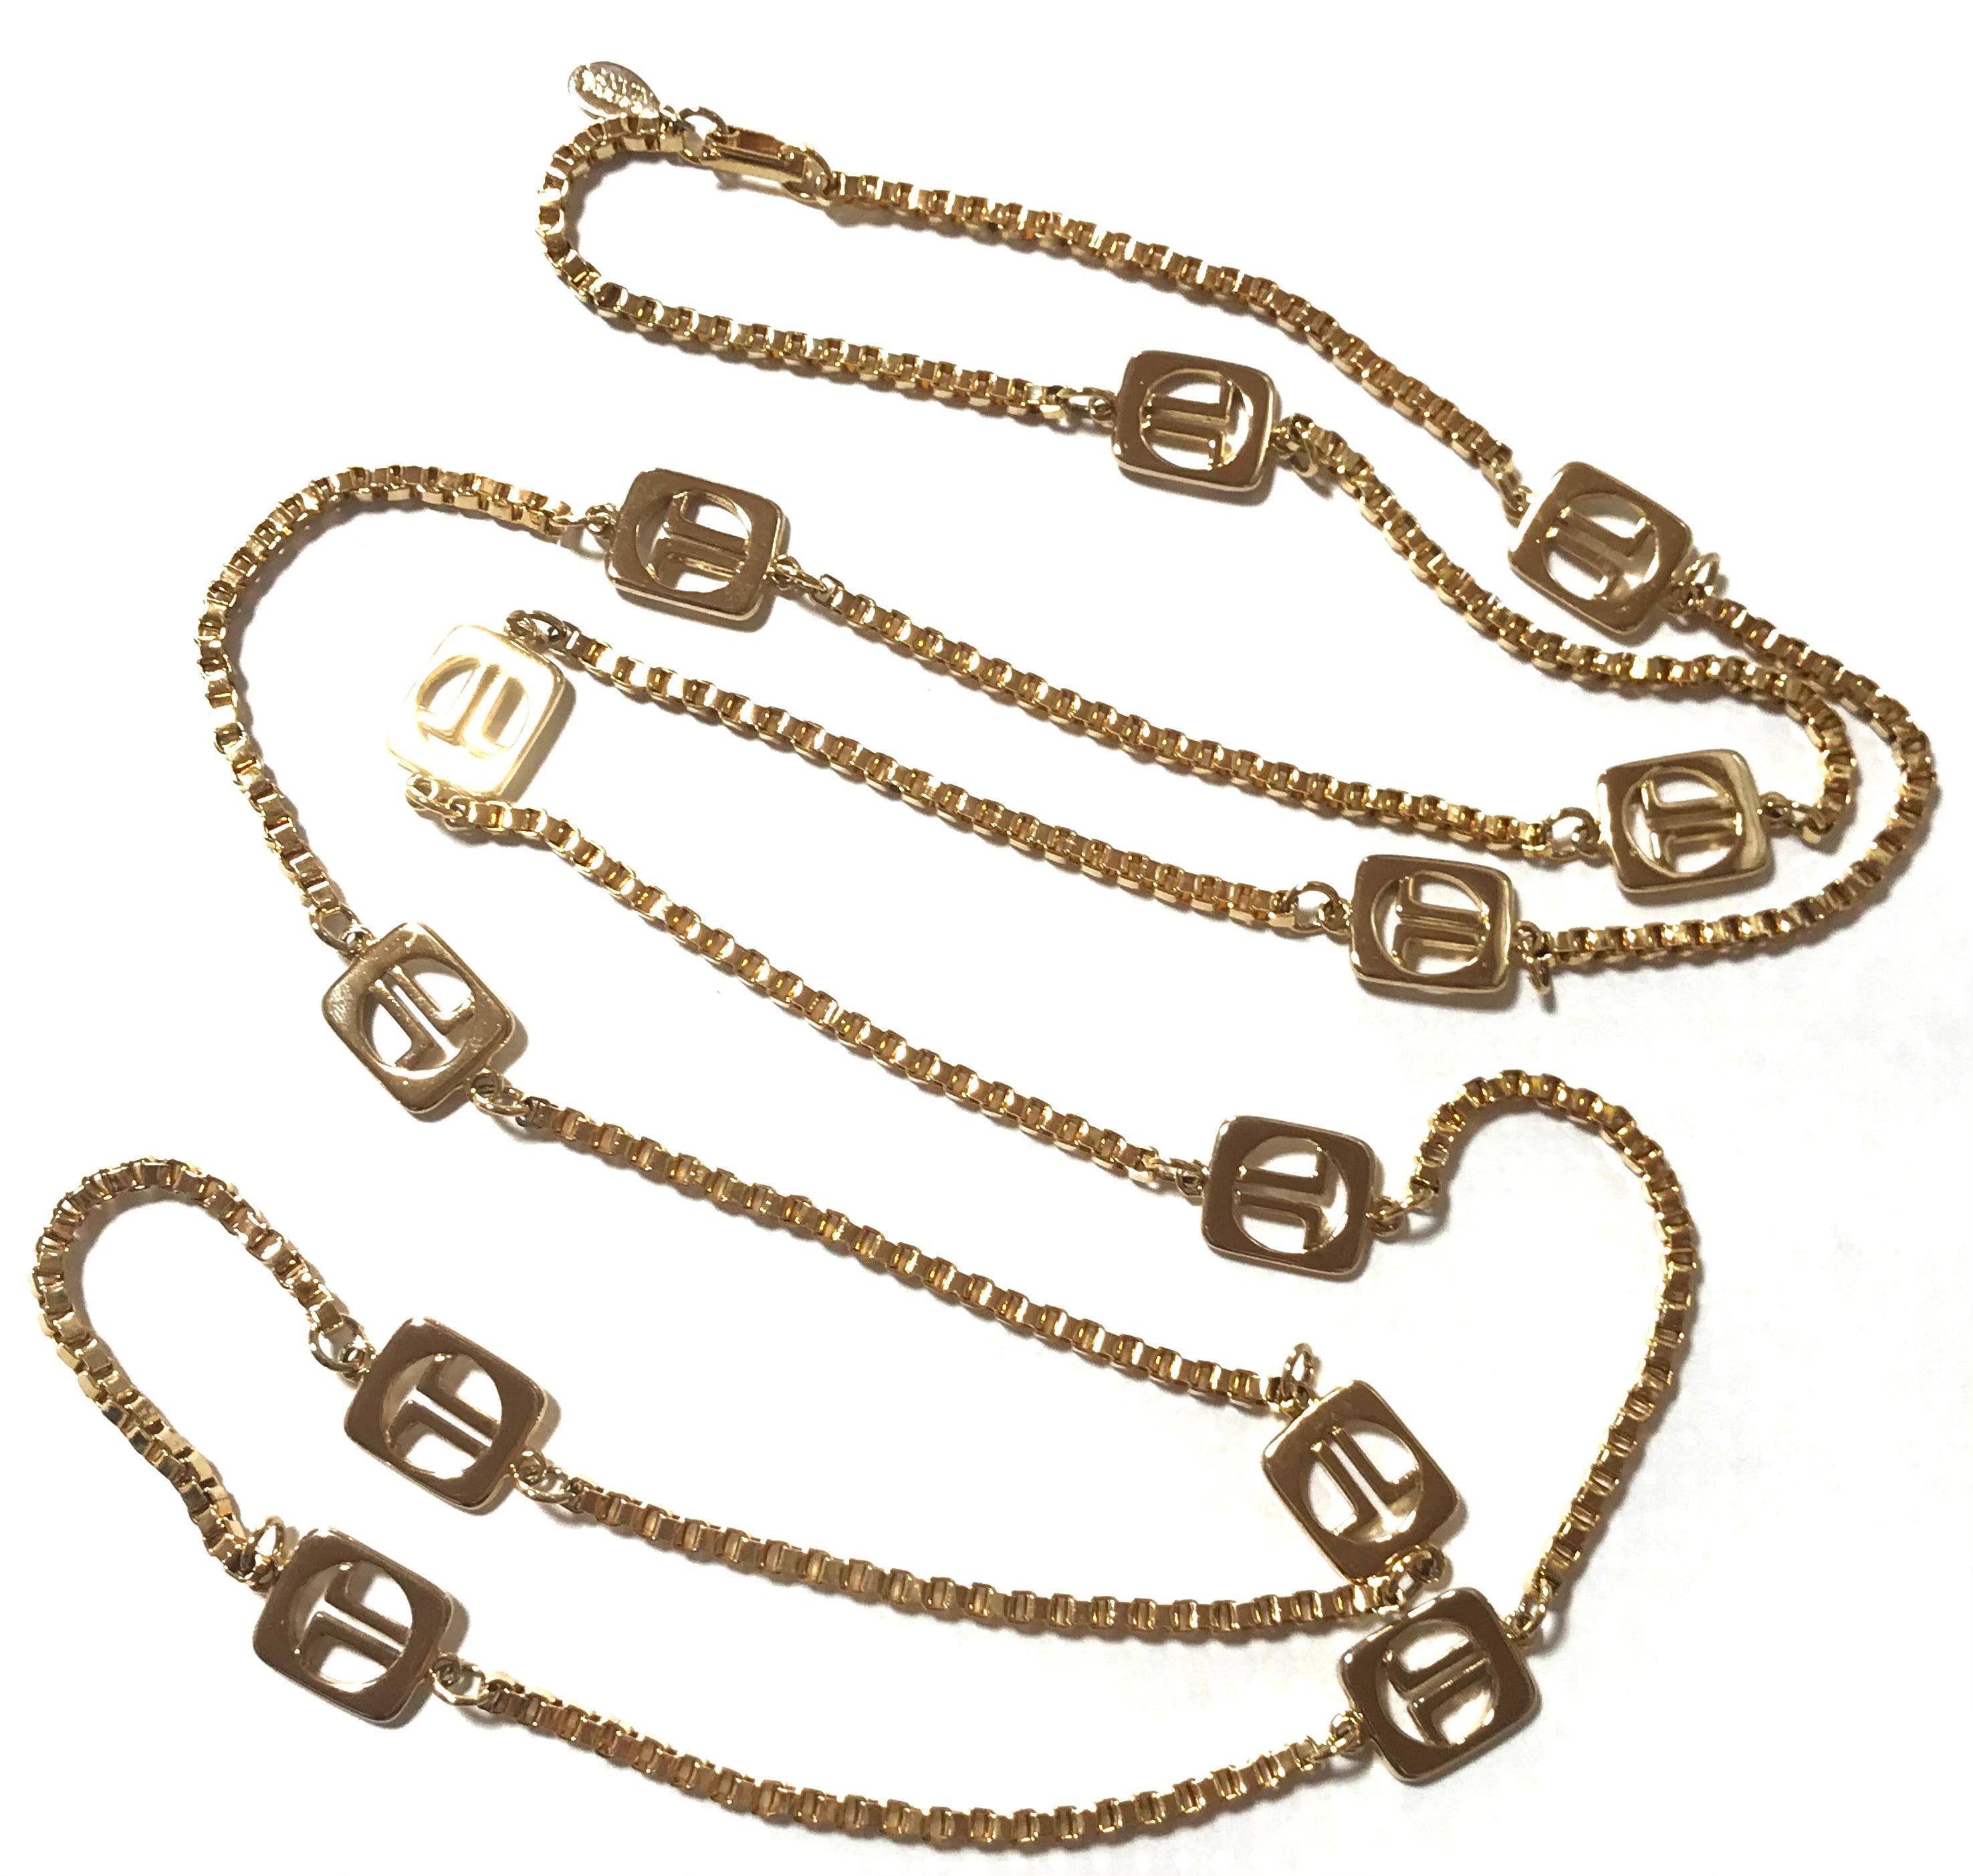 Vintage Lanvin golden chain long necklace with logo motif charms. Rare Lanvin vintage jewelry. Long necklace. 0403311